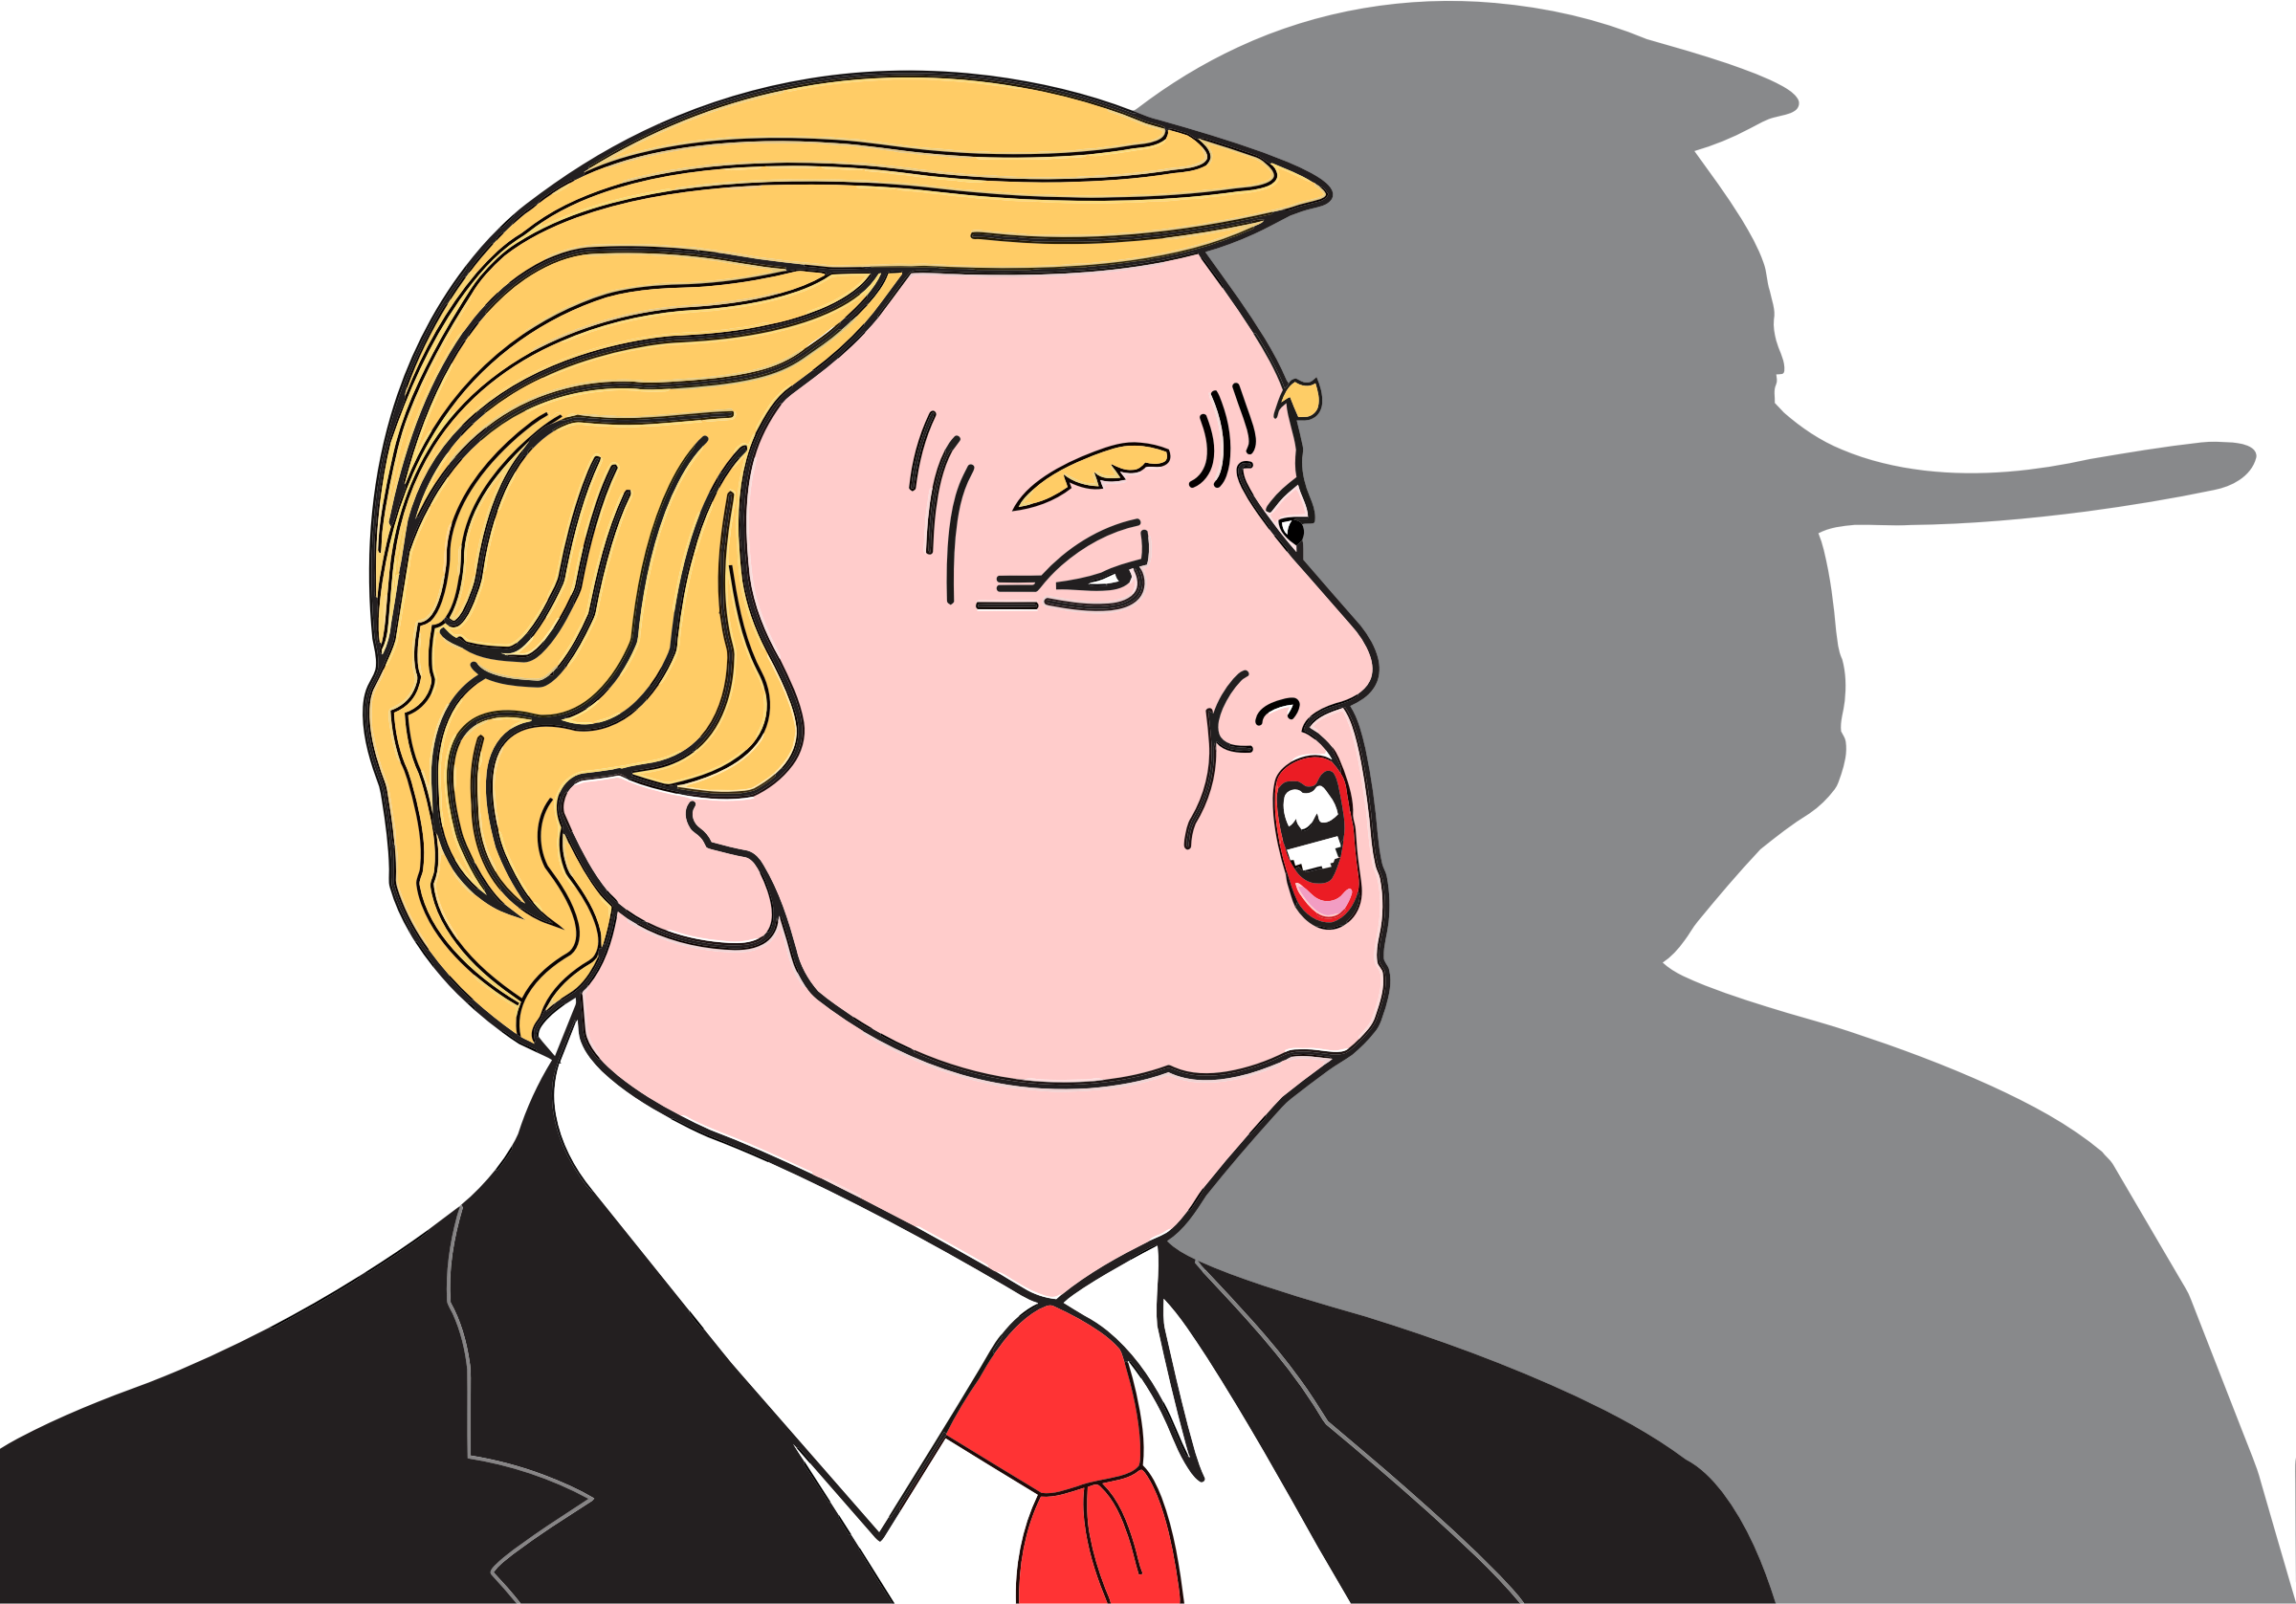 Donald Trump caricature looki